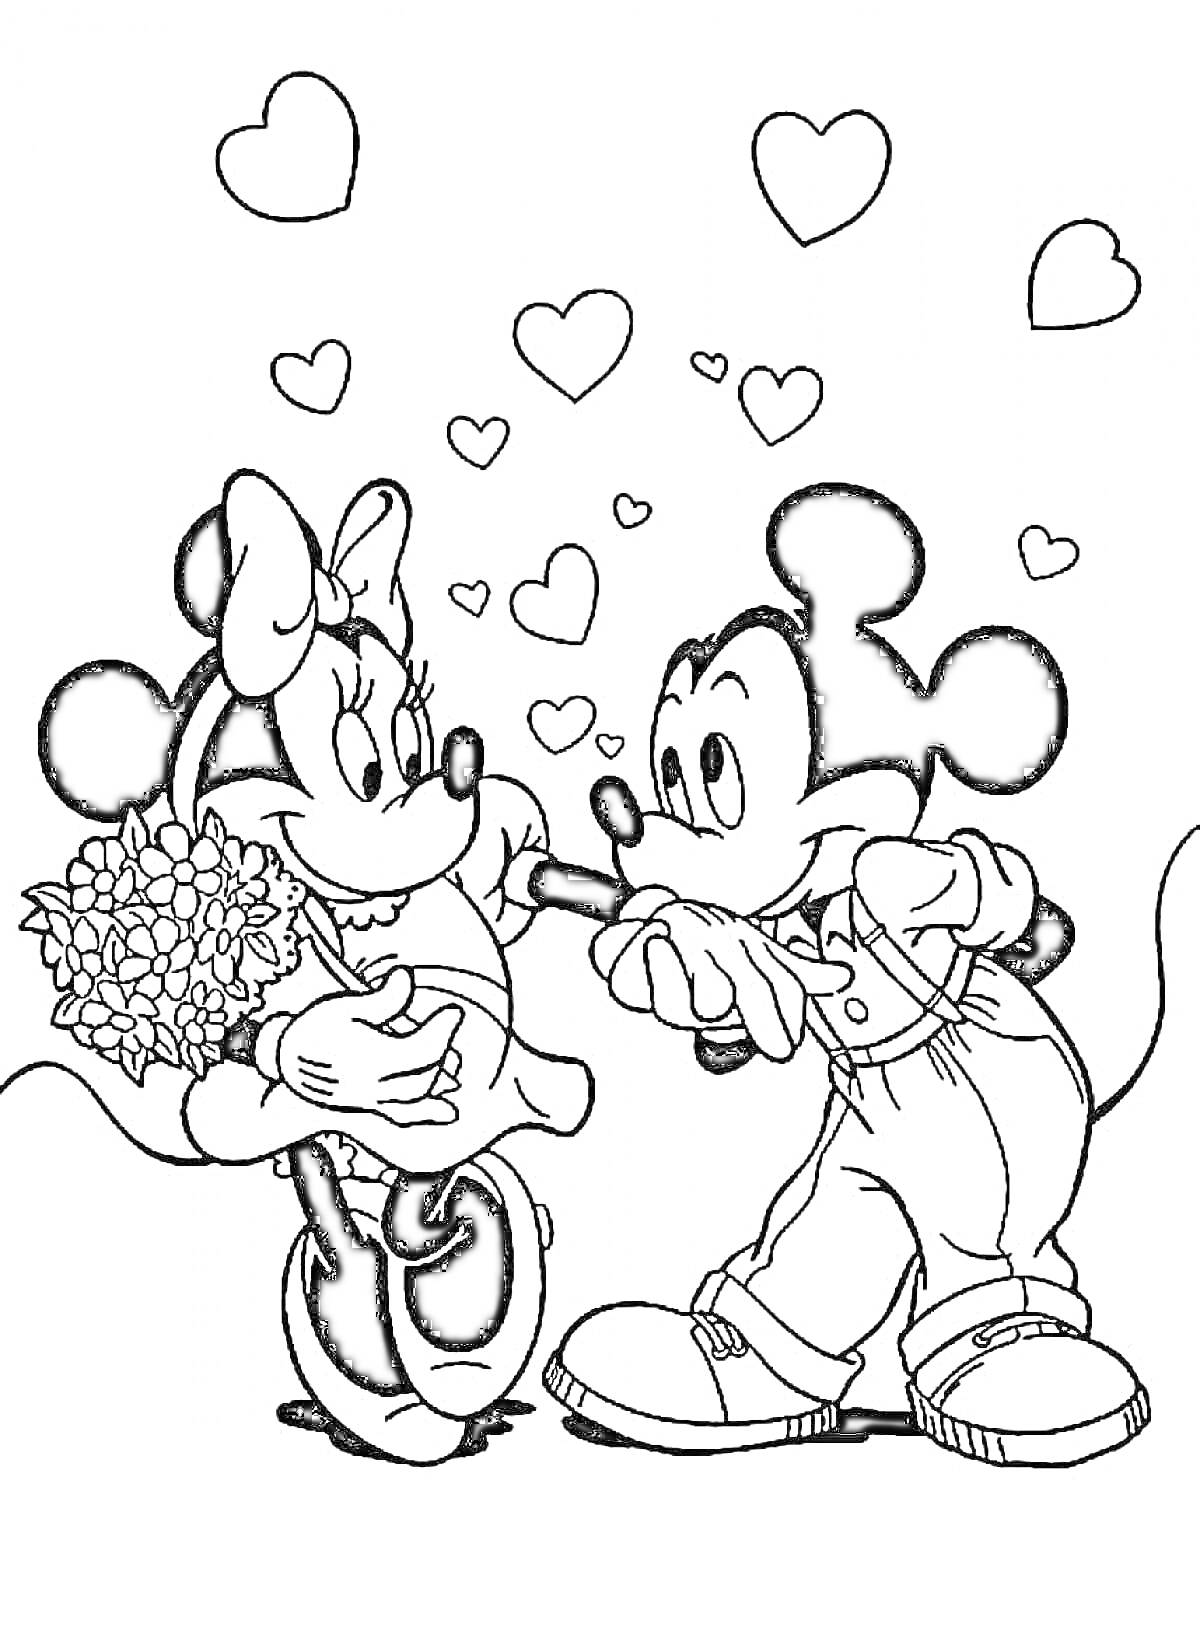 Раскраска Мики Маус и Минни Маус: Мики дарит Минни цветы, сердца вокруг